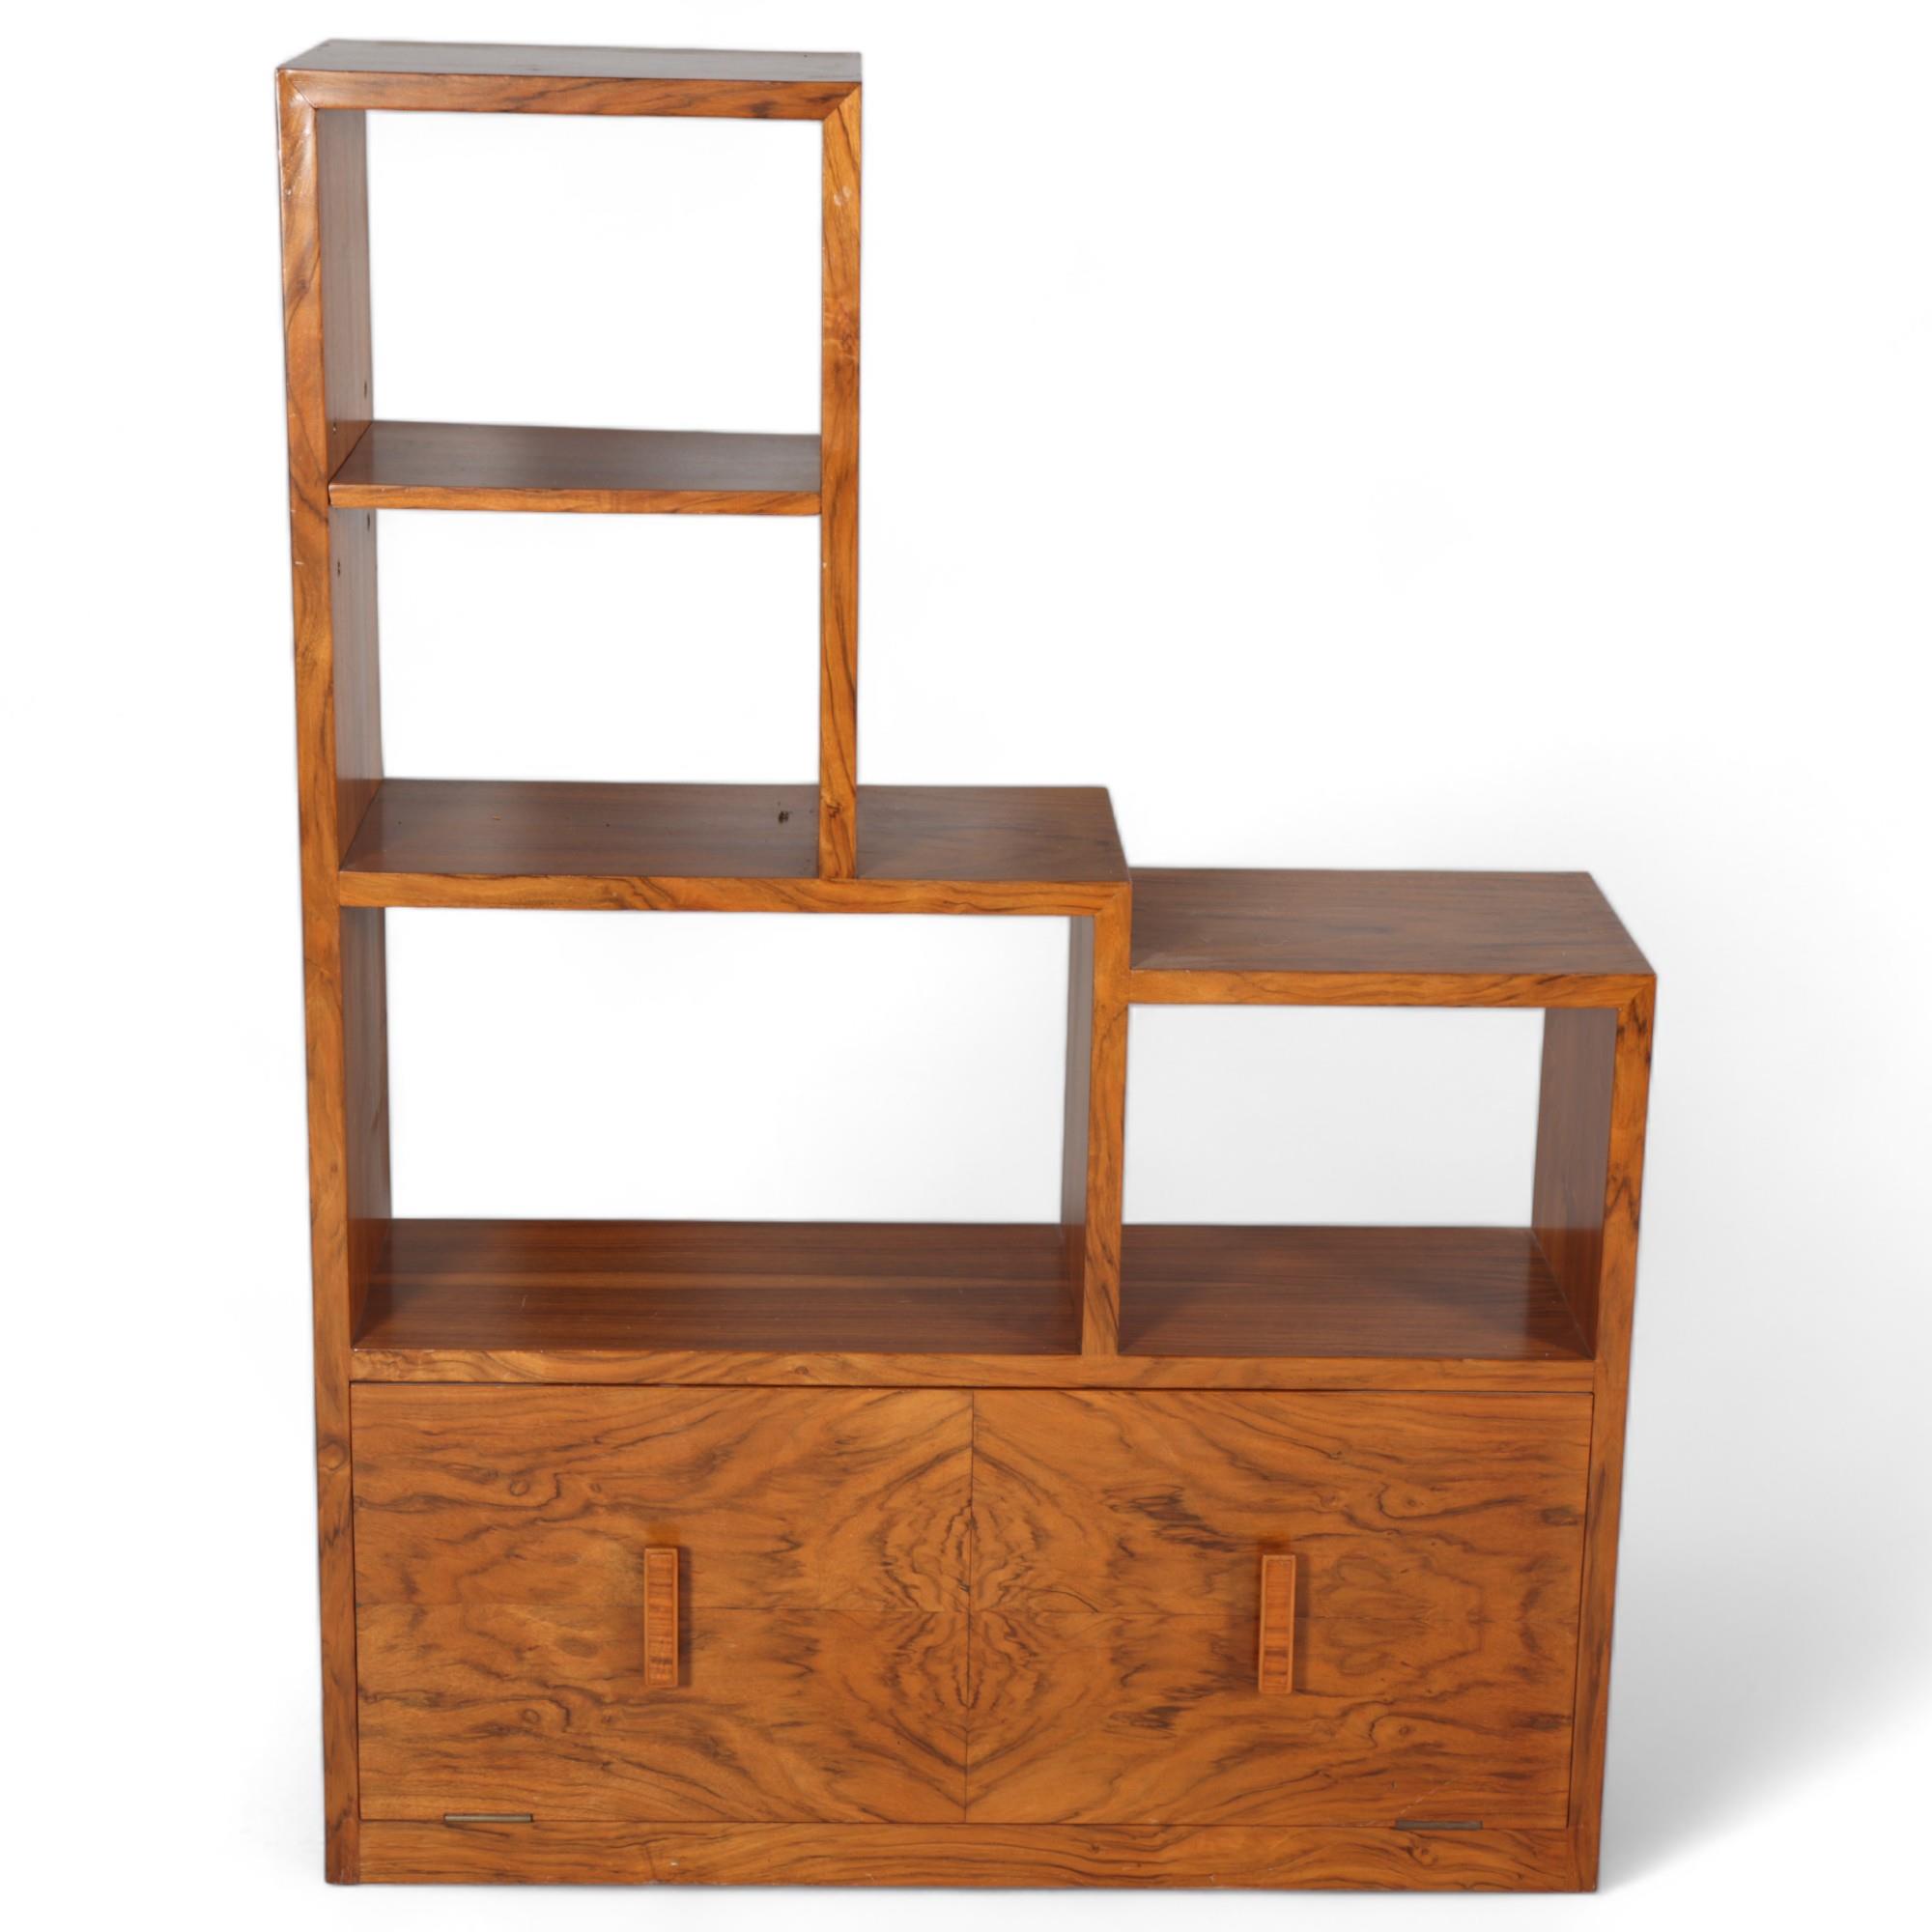 Art Deco walnut stepped open bookcase with drop-front cupboard below, width 77cm, height 107cm